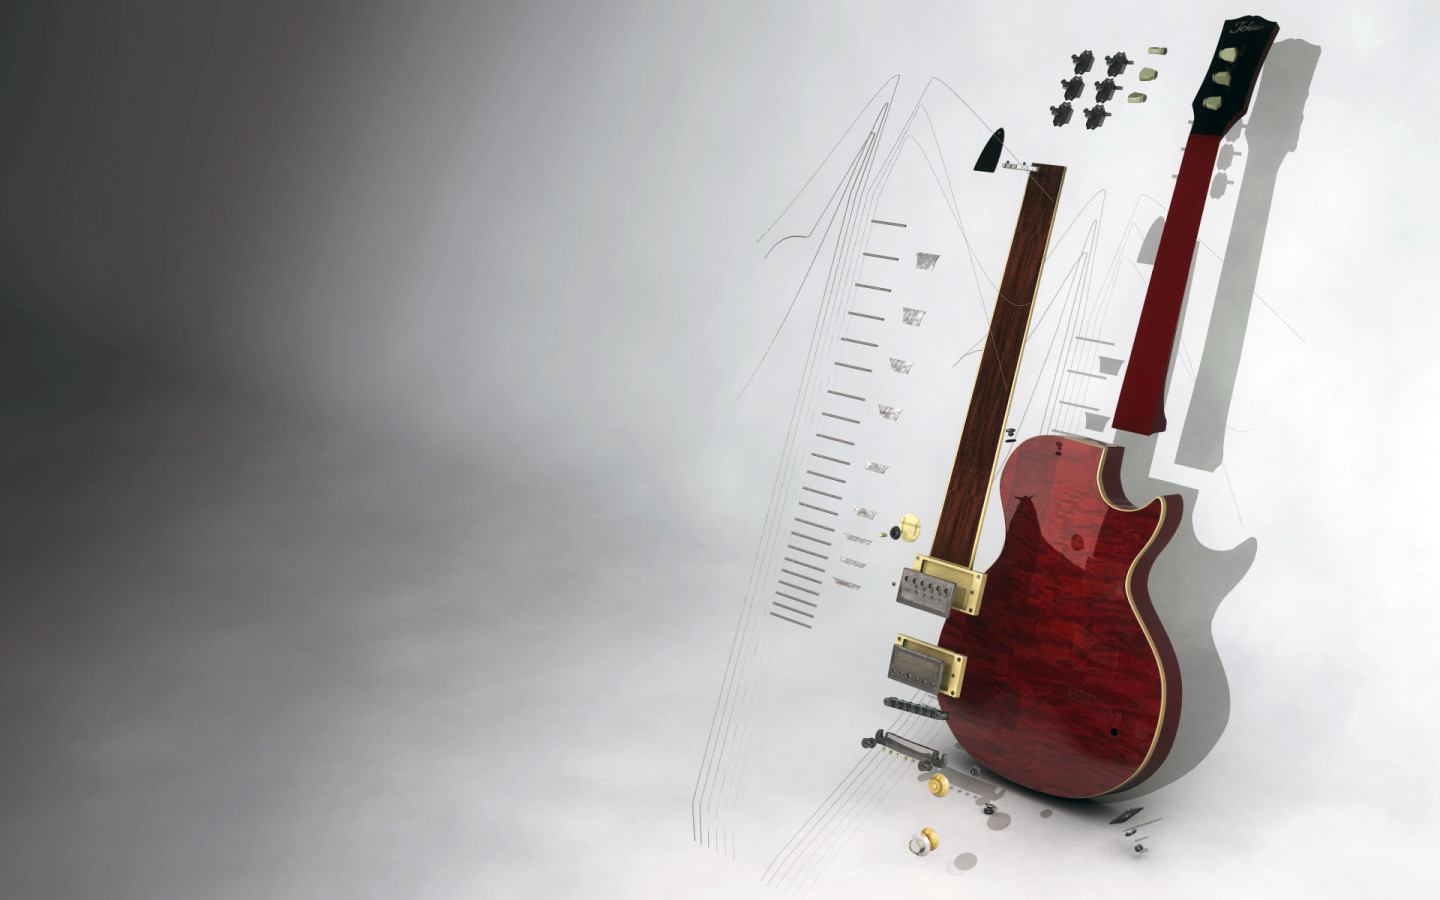 Previous, 3D-graphics - Musical instrument wallpaper